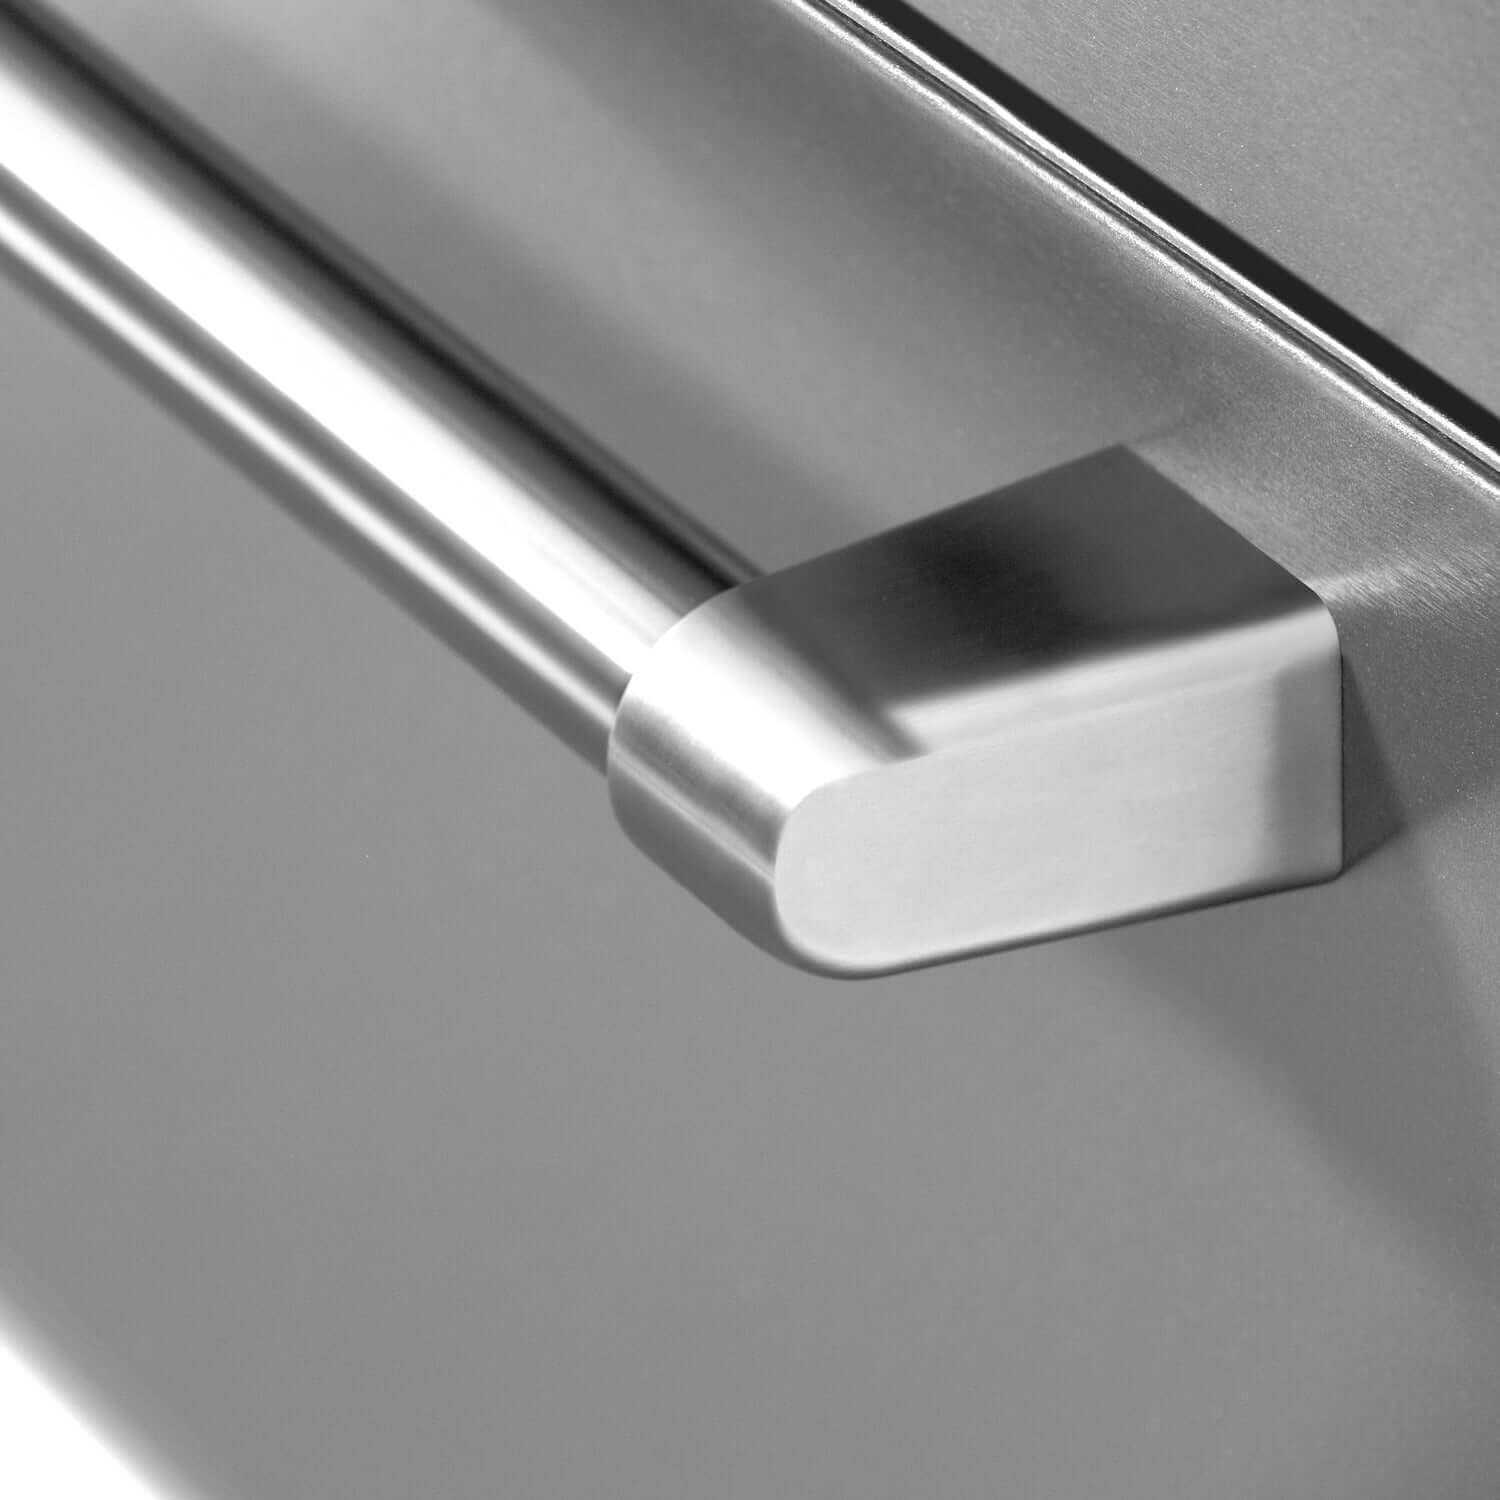 Stainless steel handle on bottom freezer drawer on ZLINE 36" French door refrigerator.